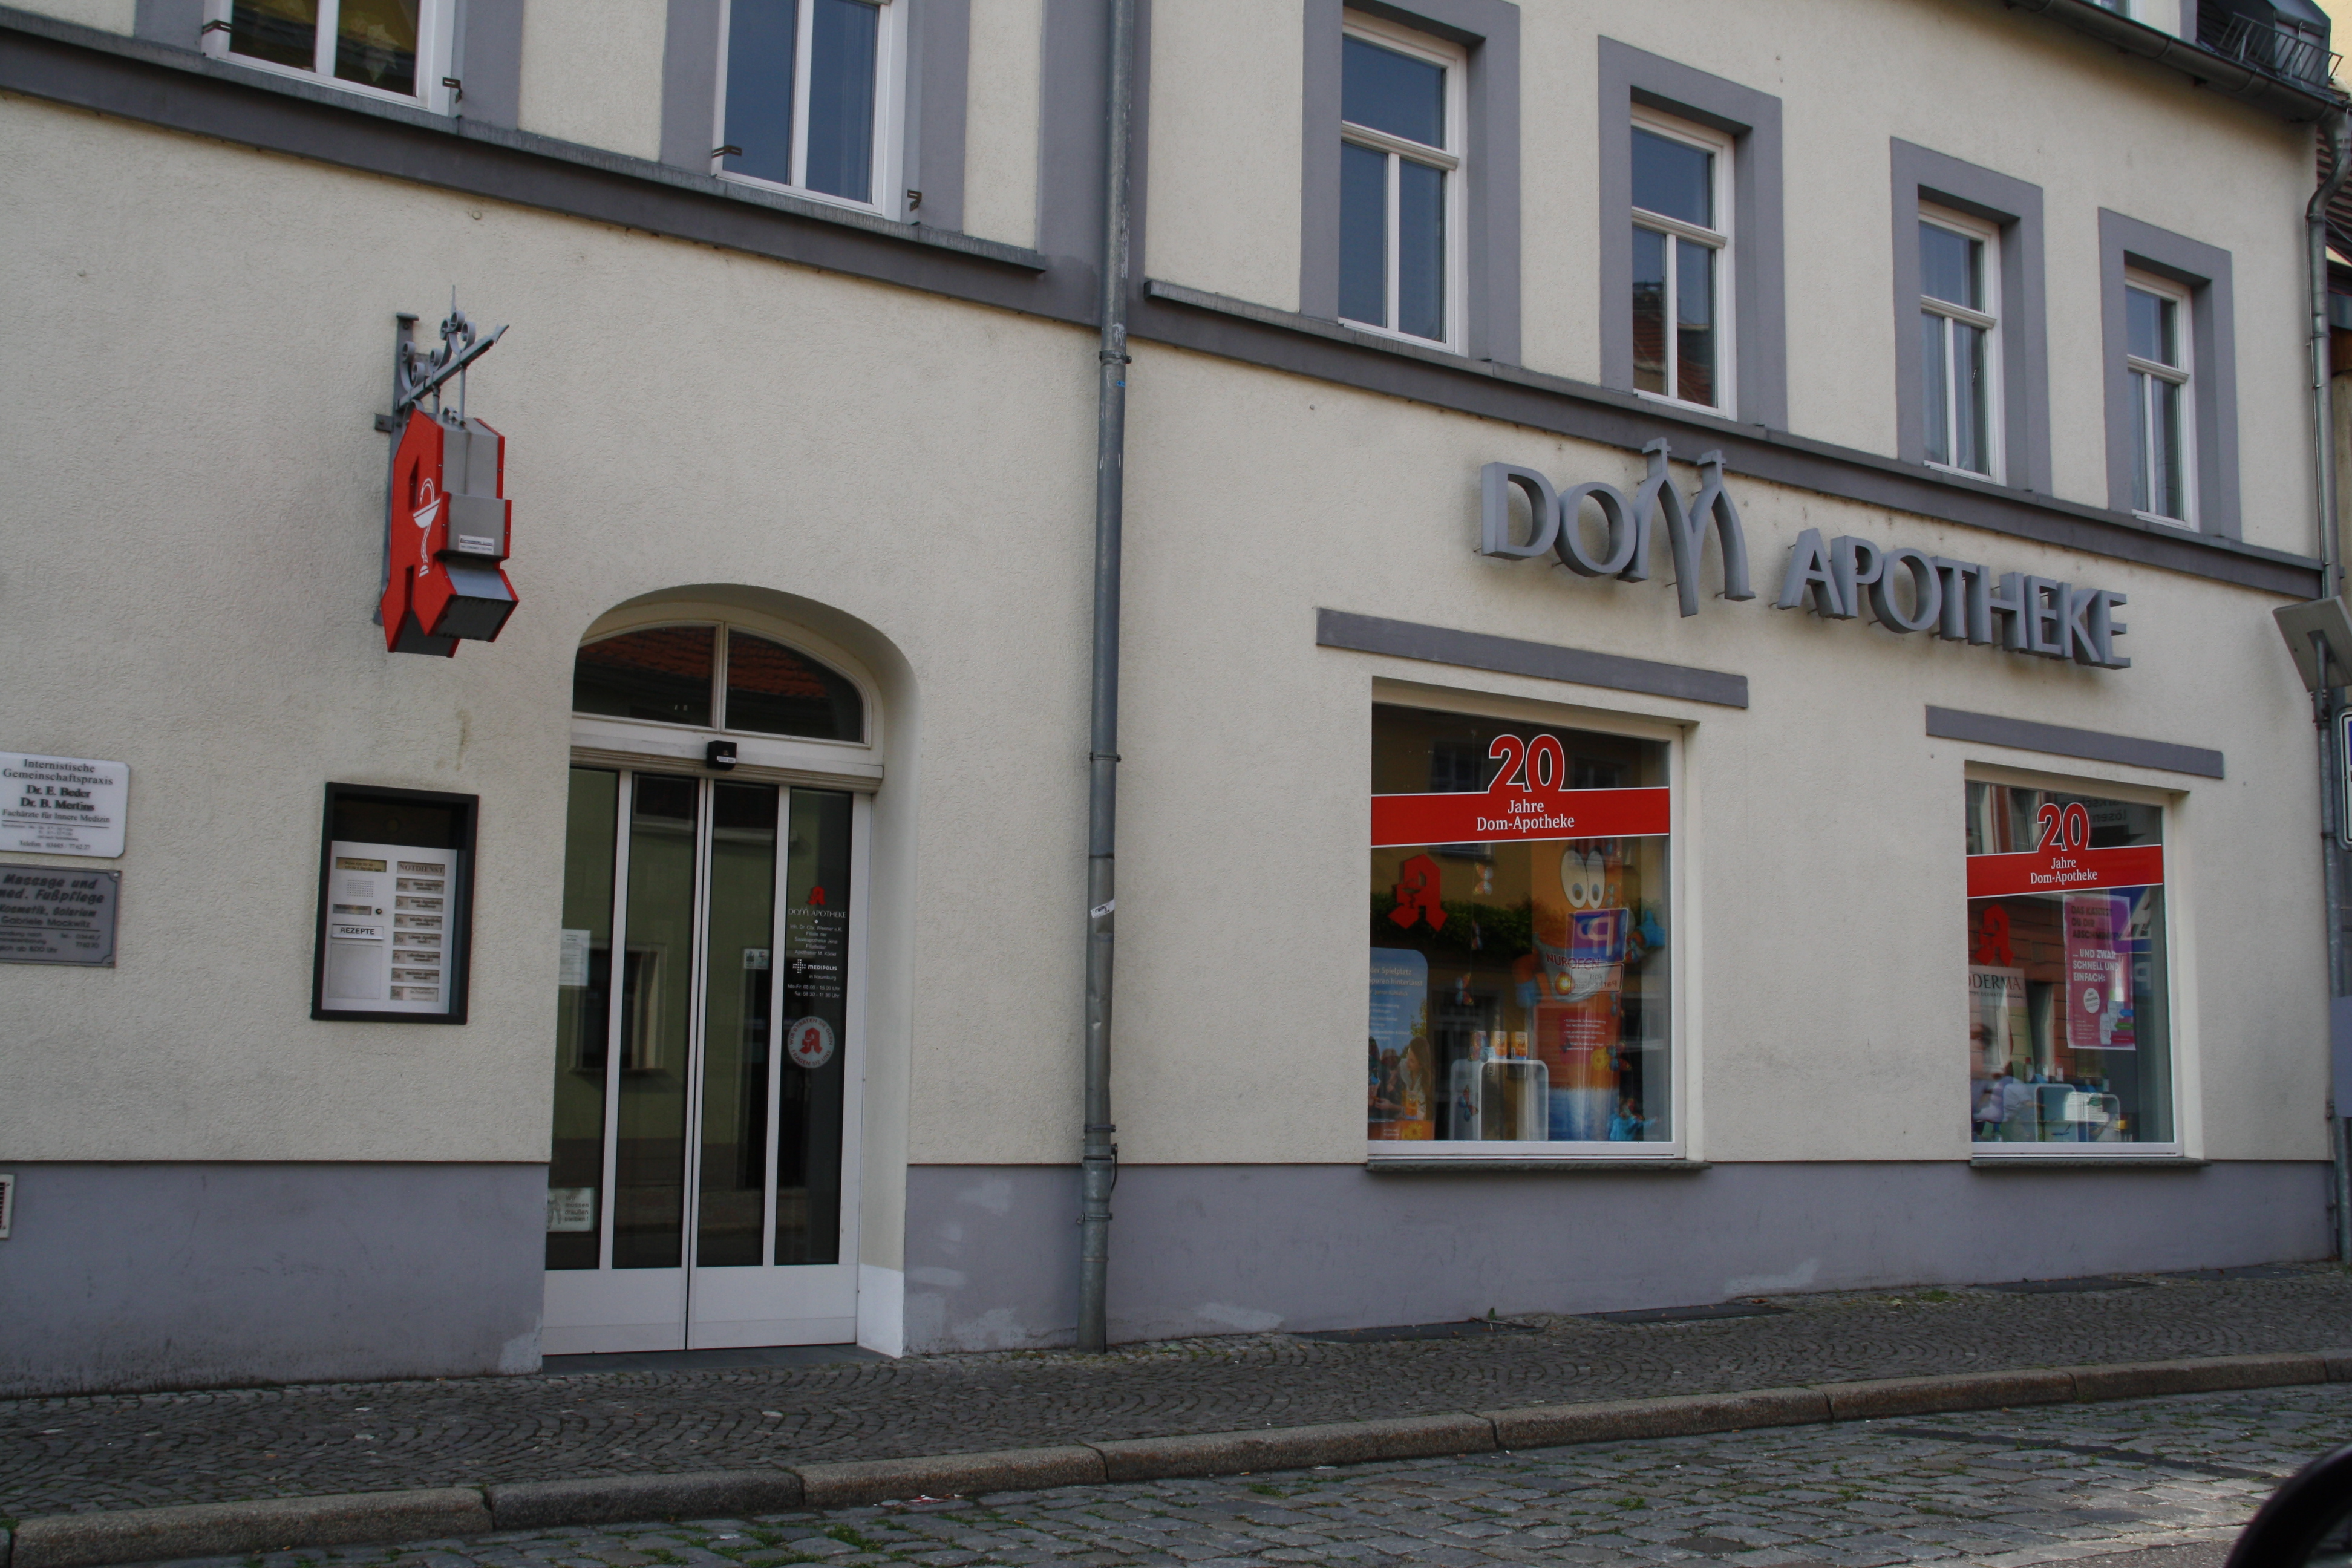 Bild 1 Dom-Apotheke in Naumburg (Saale)